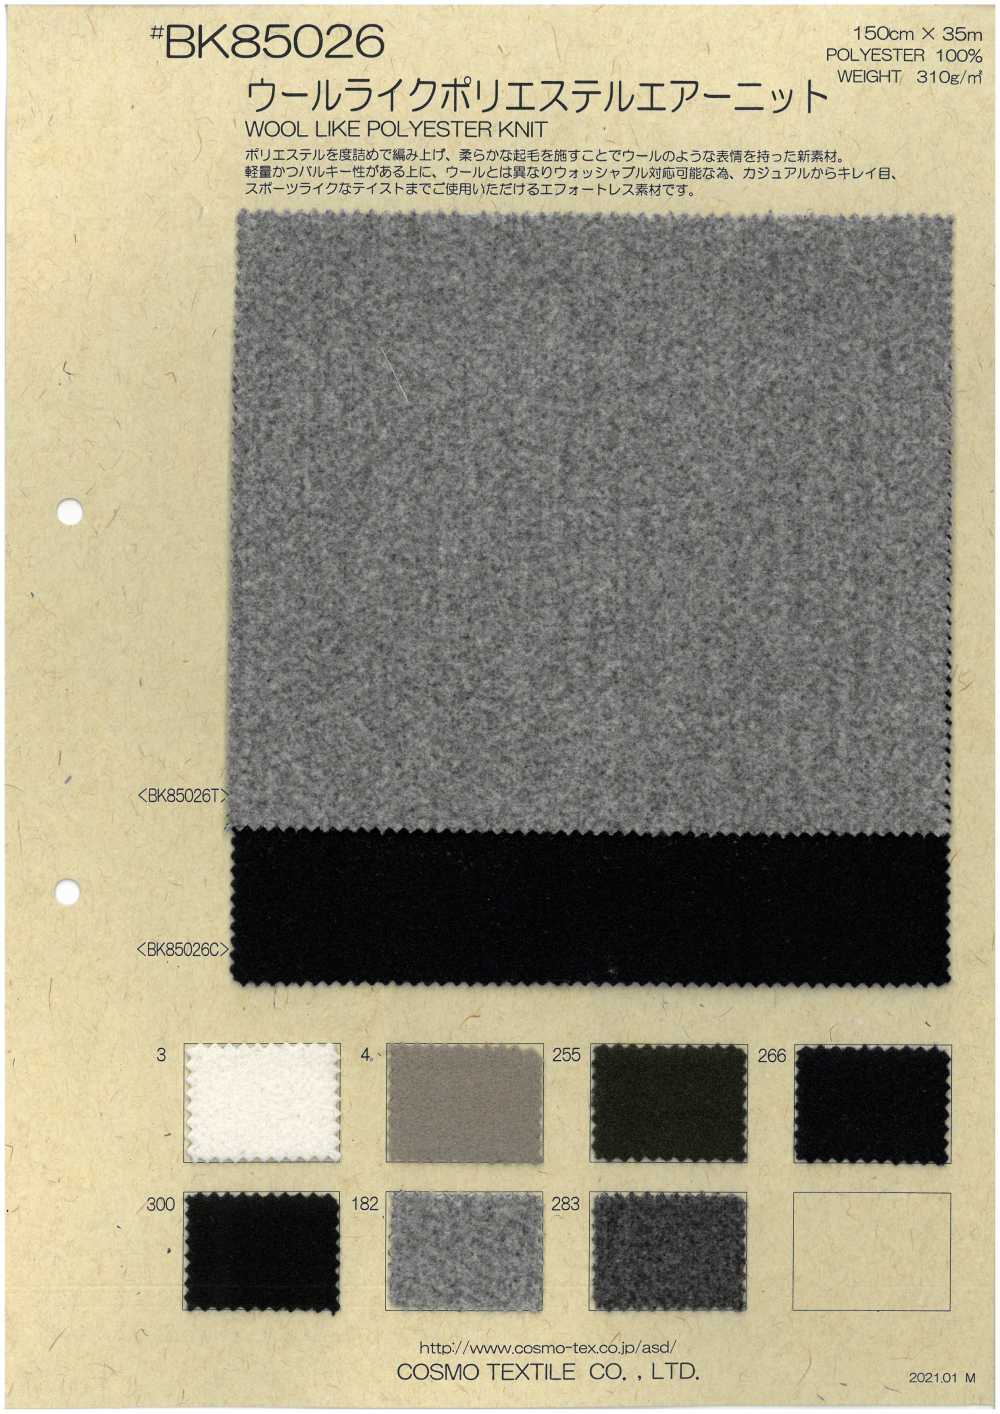 BK85026 [OUTLET] Malha Pneumática De Poliéster Semelhante A Lã[Têxtil / Tecido] COSMO TEXTILE